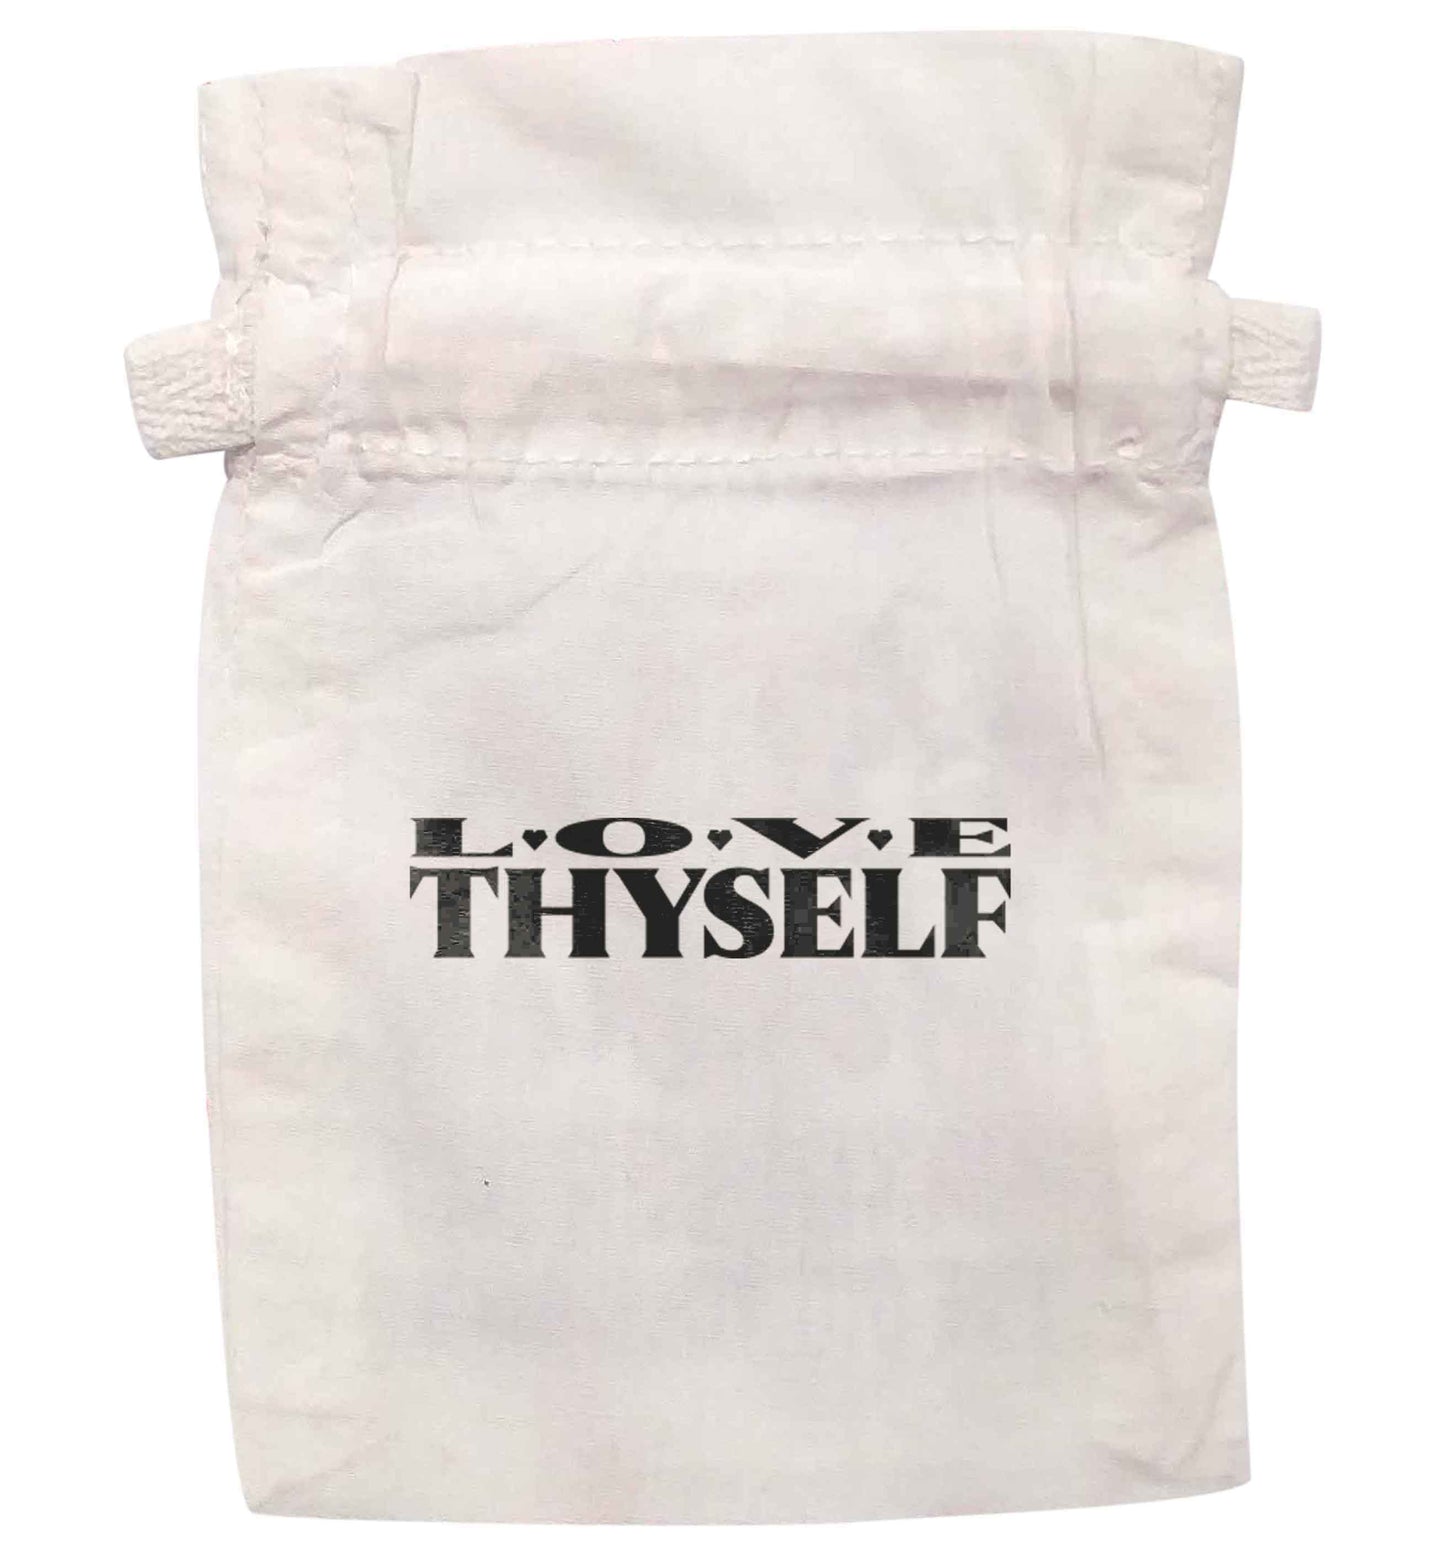 Love thyself | XS - L | Pouch / Drawstring bag / Sack | Organic Cotton | Bulk discounts available!